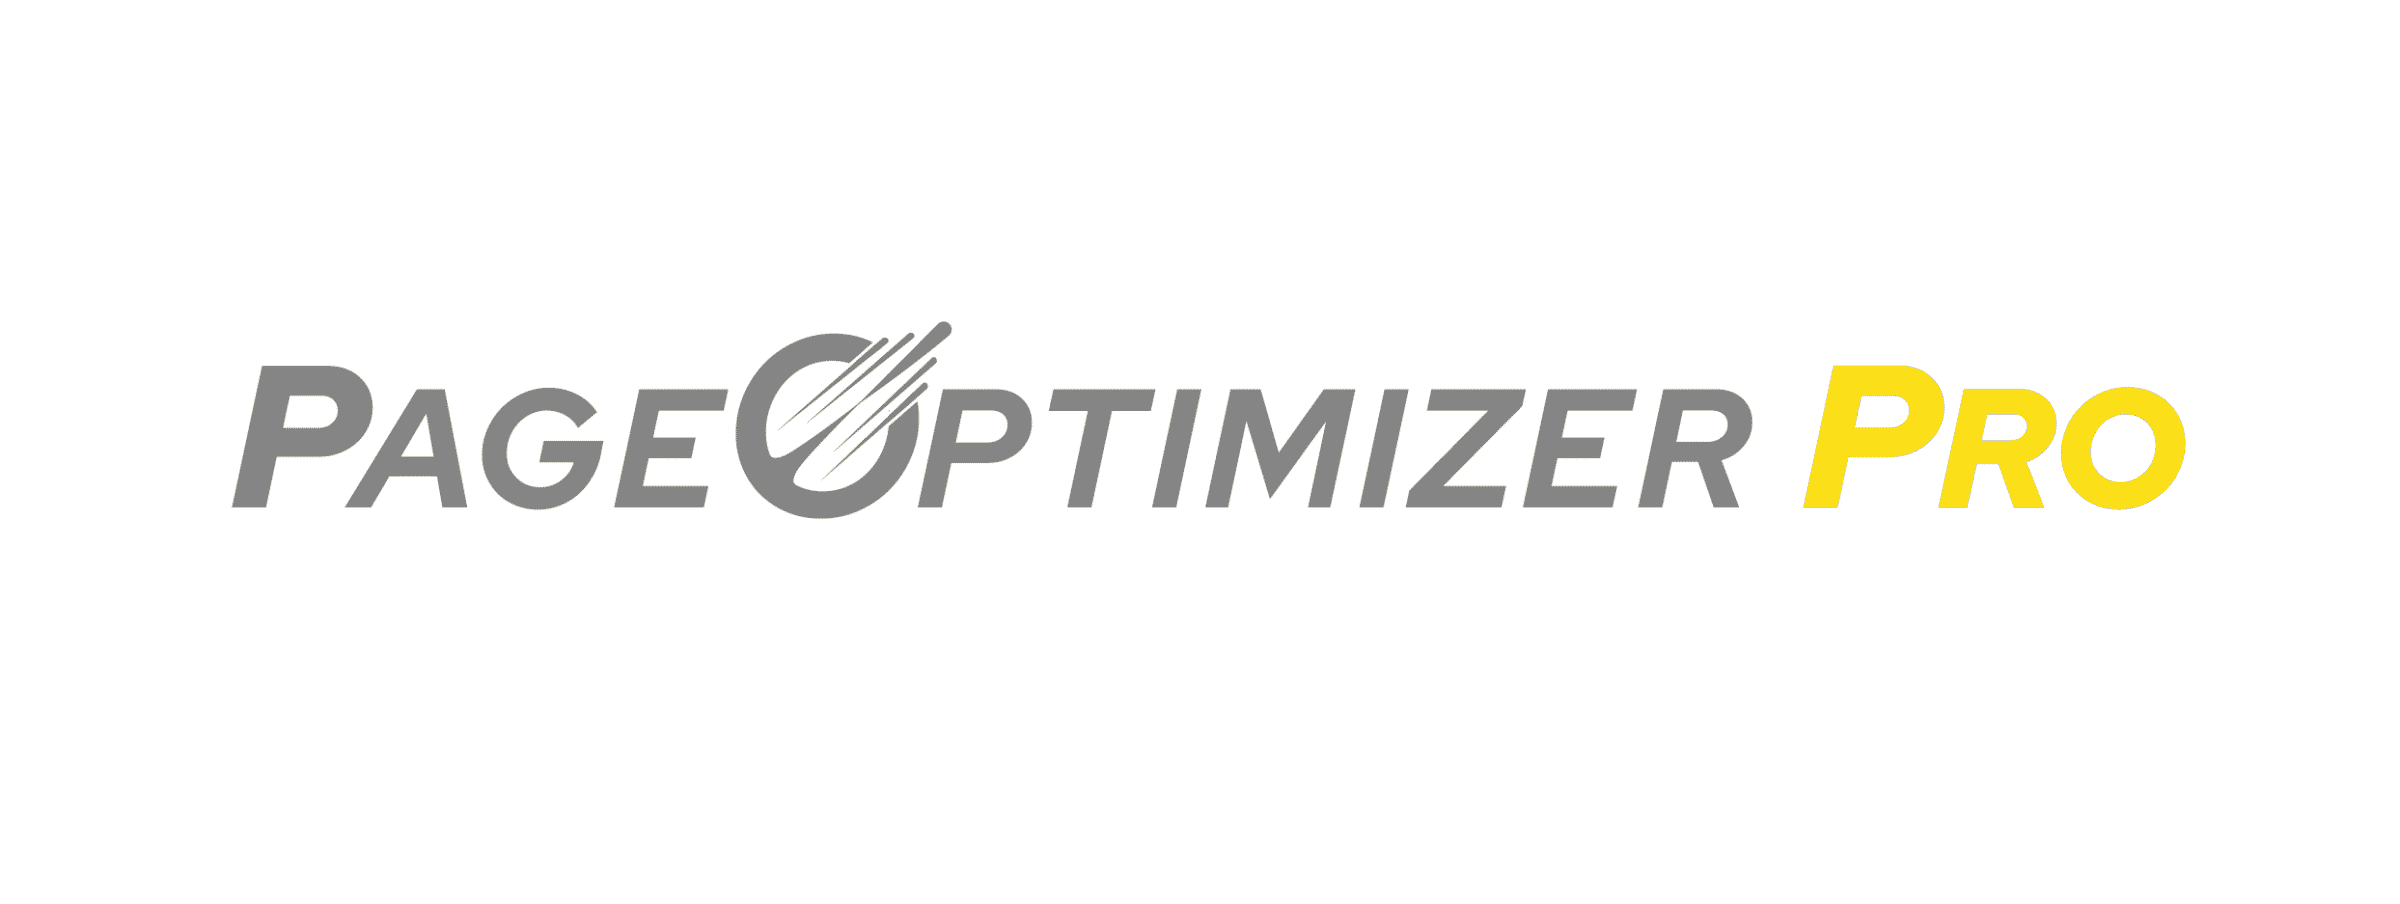 Partners Digital Advertising Tools pageoptimizer pro logo